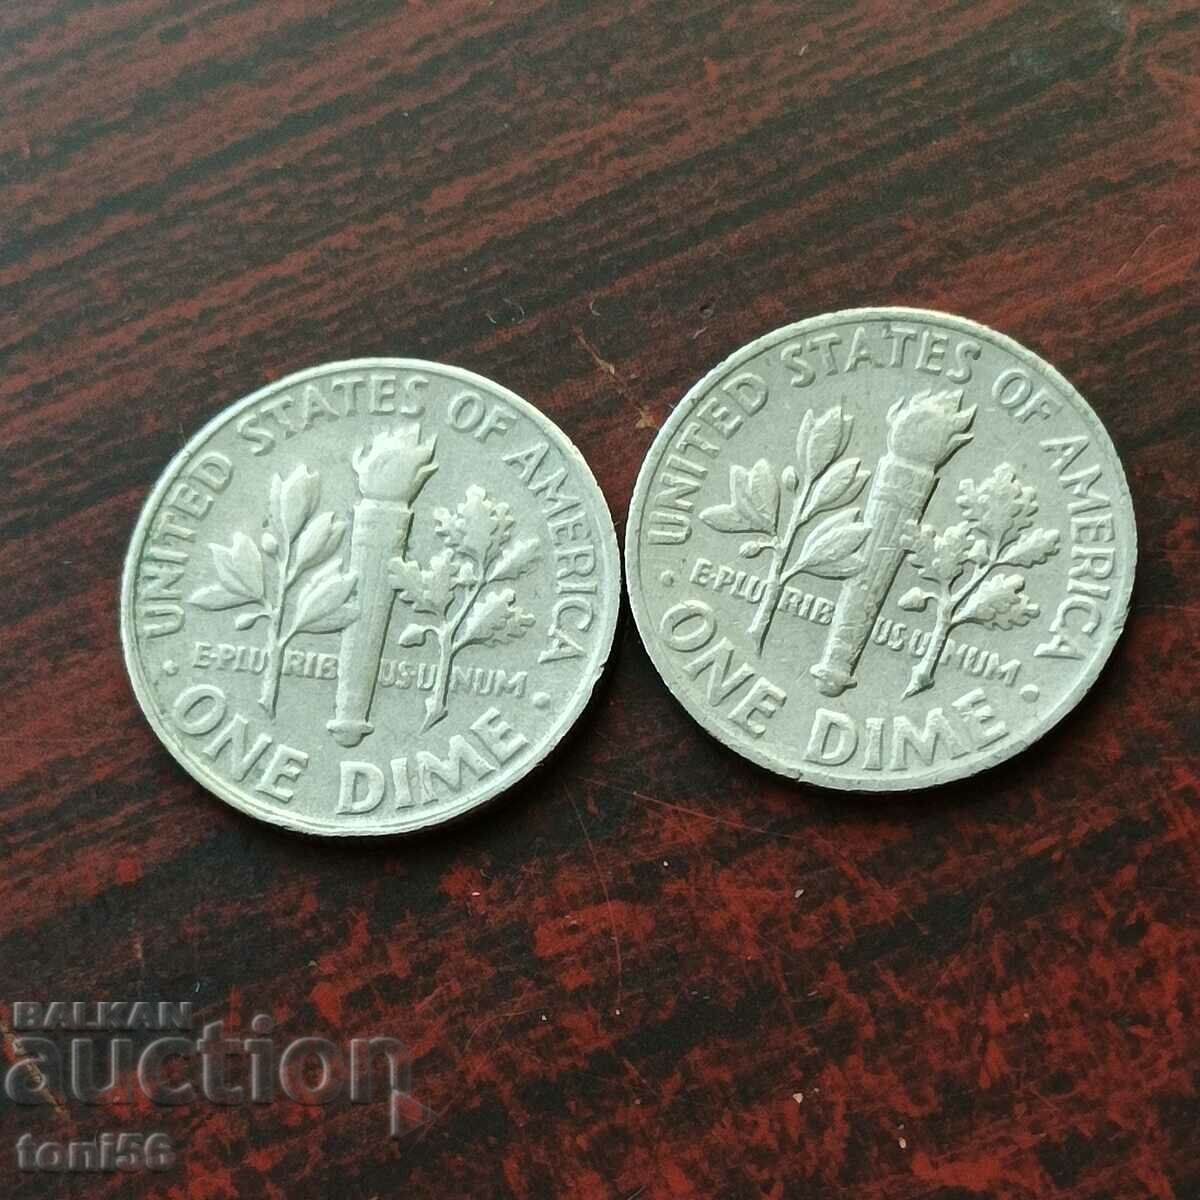 Uruguay 1 și 2 pesos 2011/12